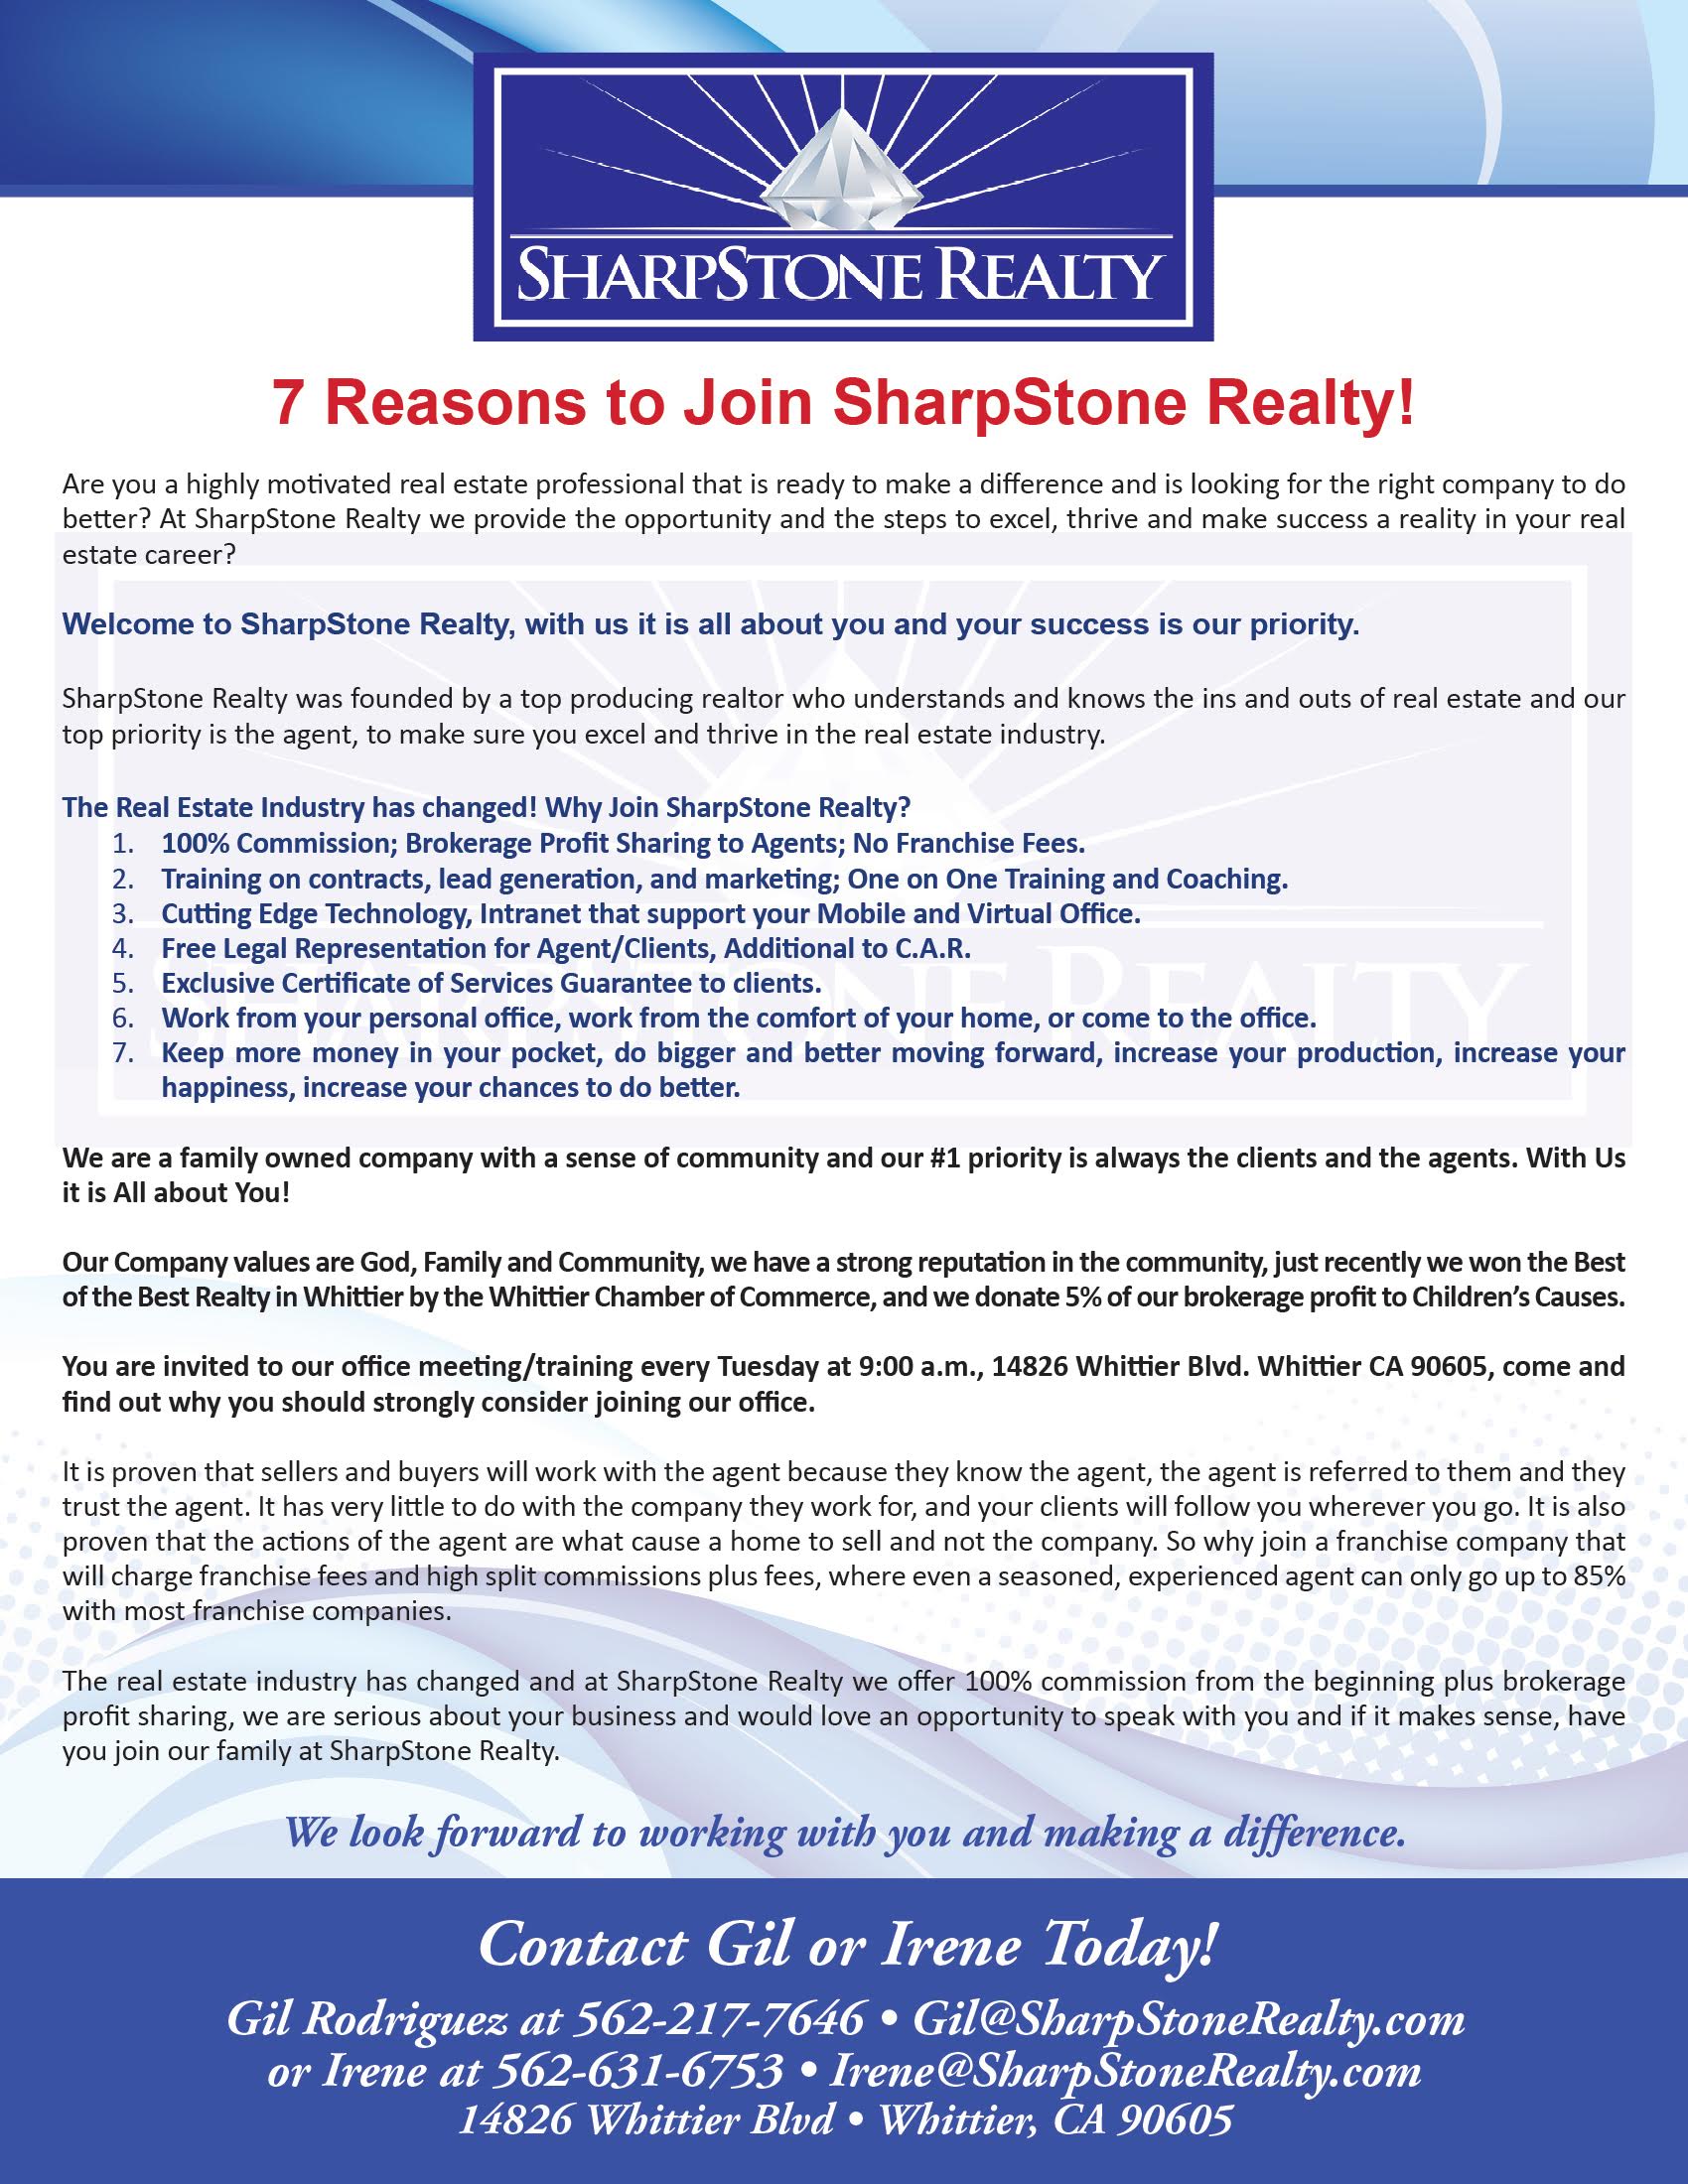 Reasons_to_Join_Sharpstone_Realty.jpg